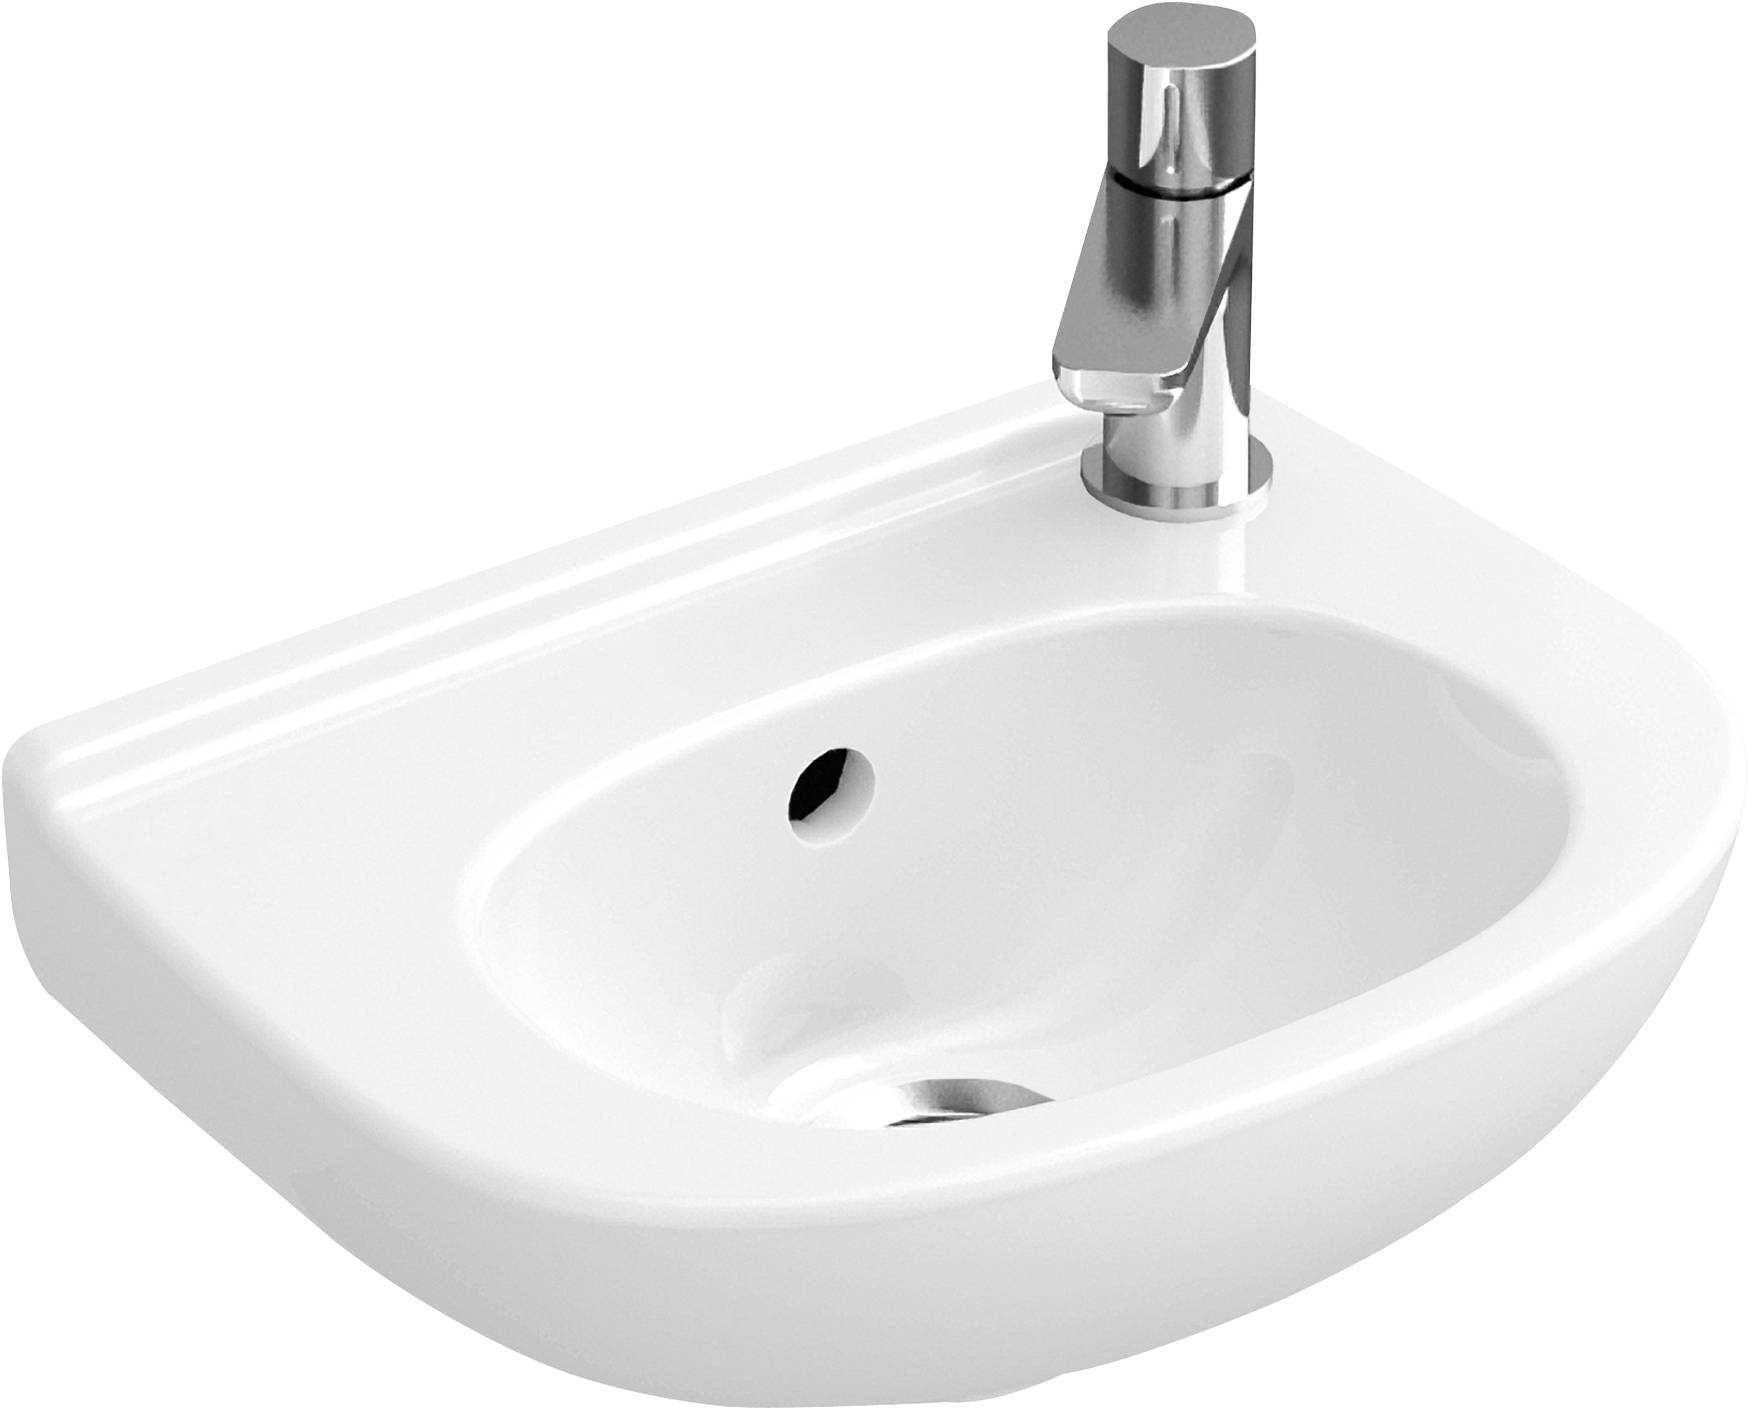 O.novo Handwashbasin Compact 536036